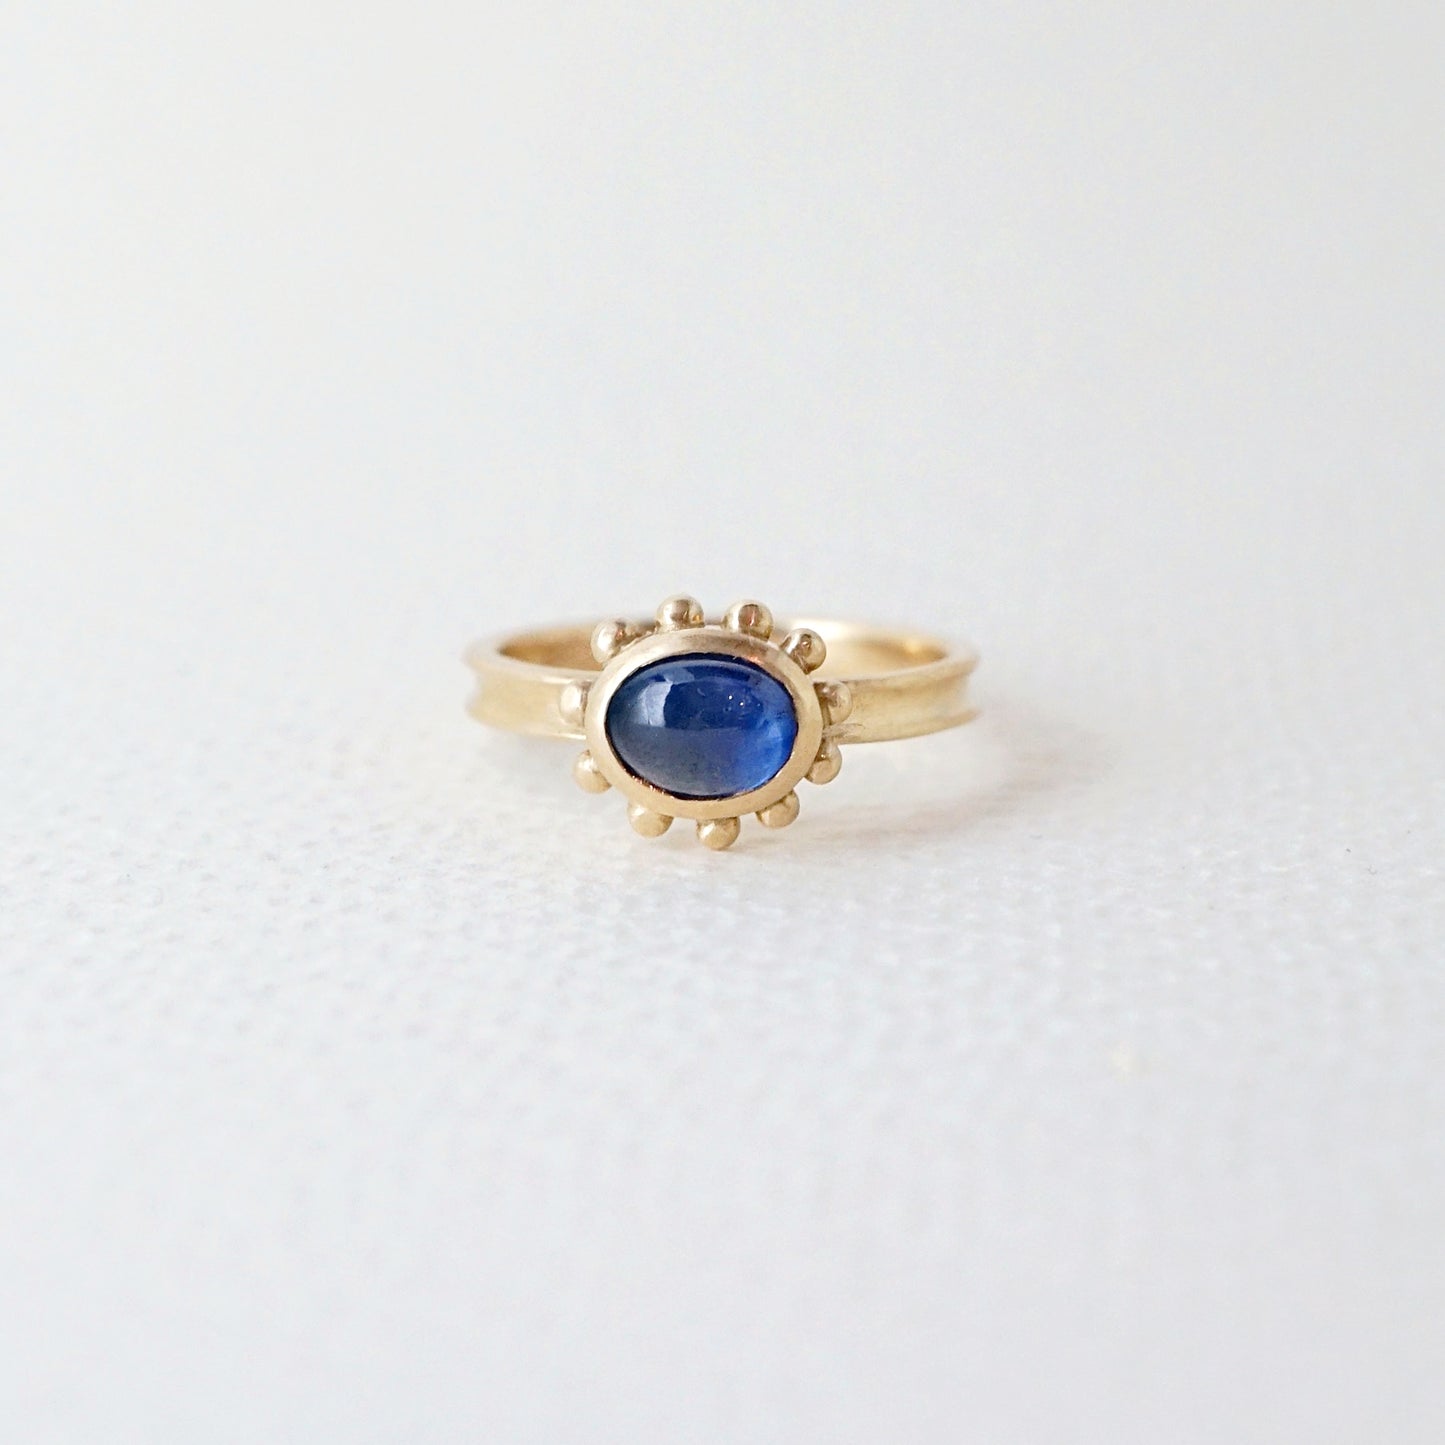 Nova ring with Sapphire